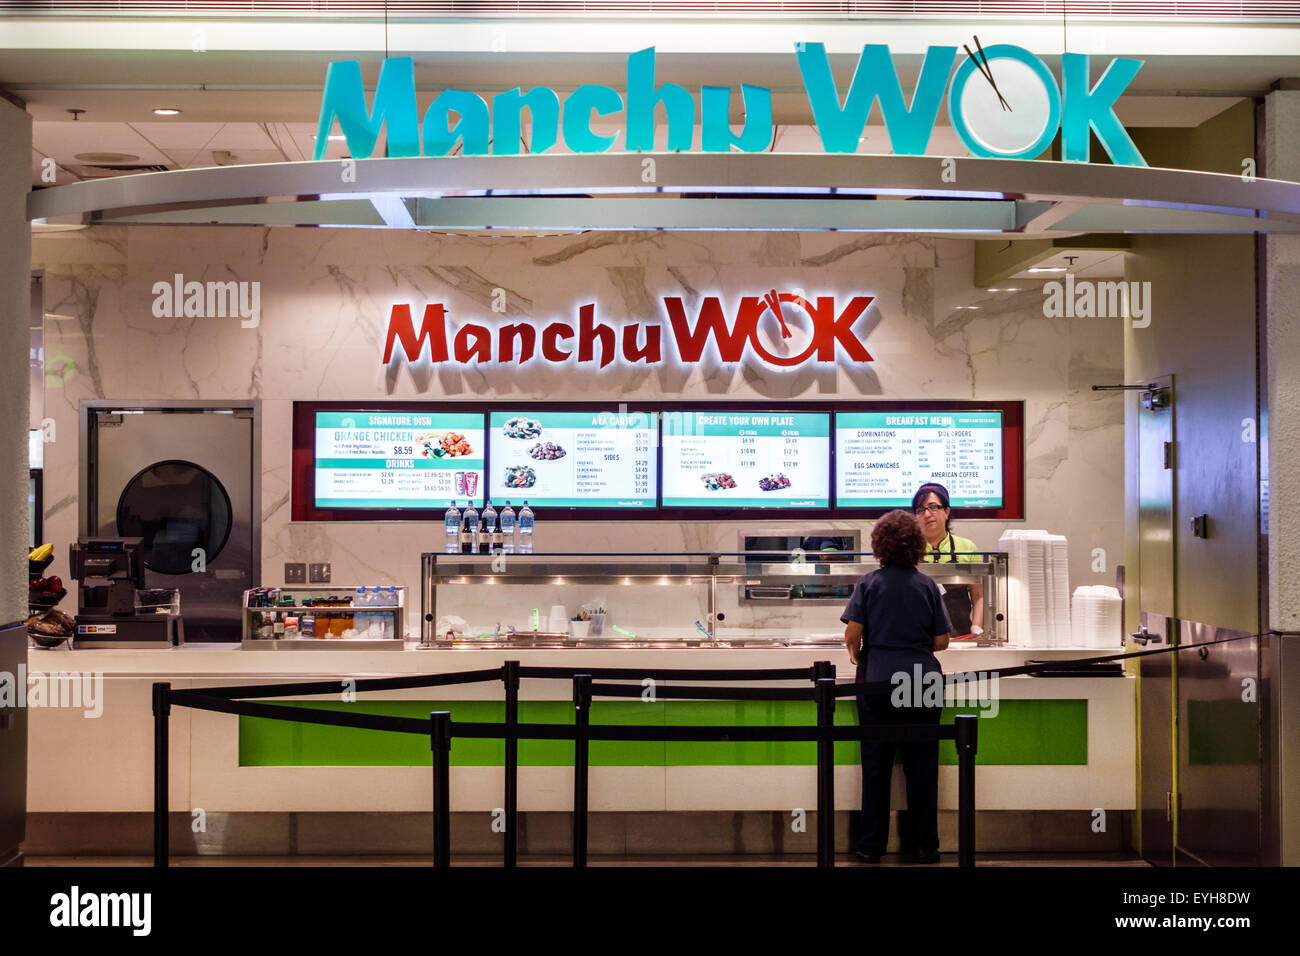 Manchu wok hi-res stock photography and images - Alamy